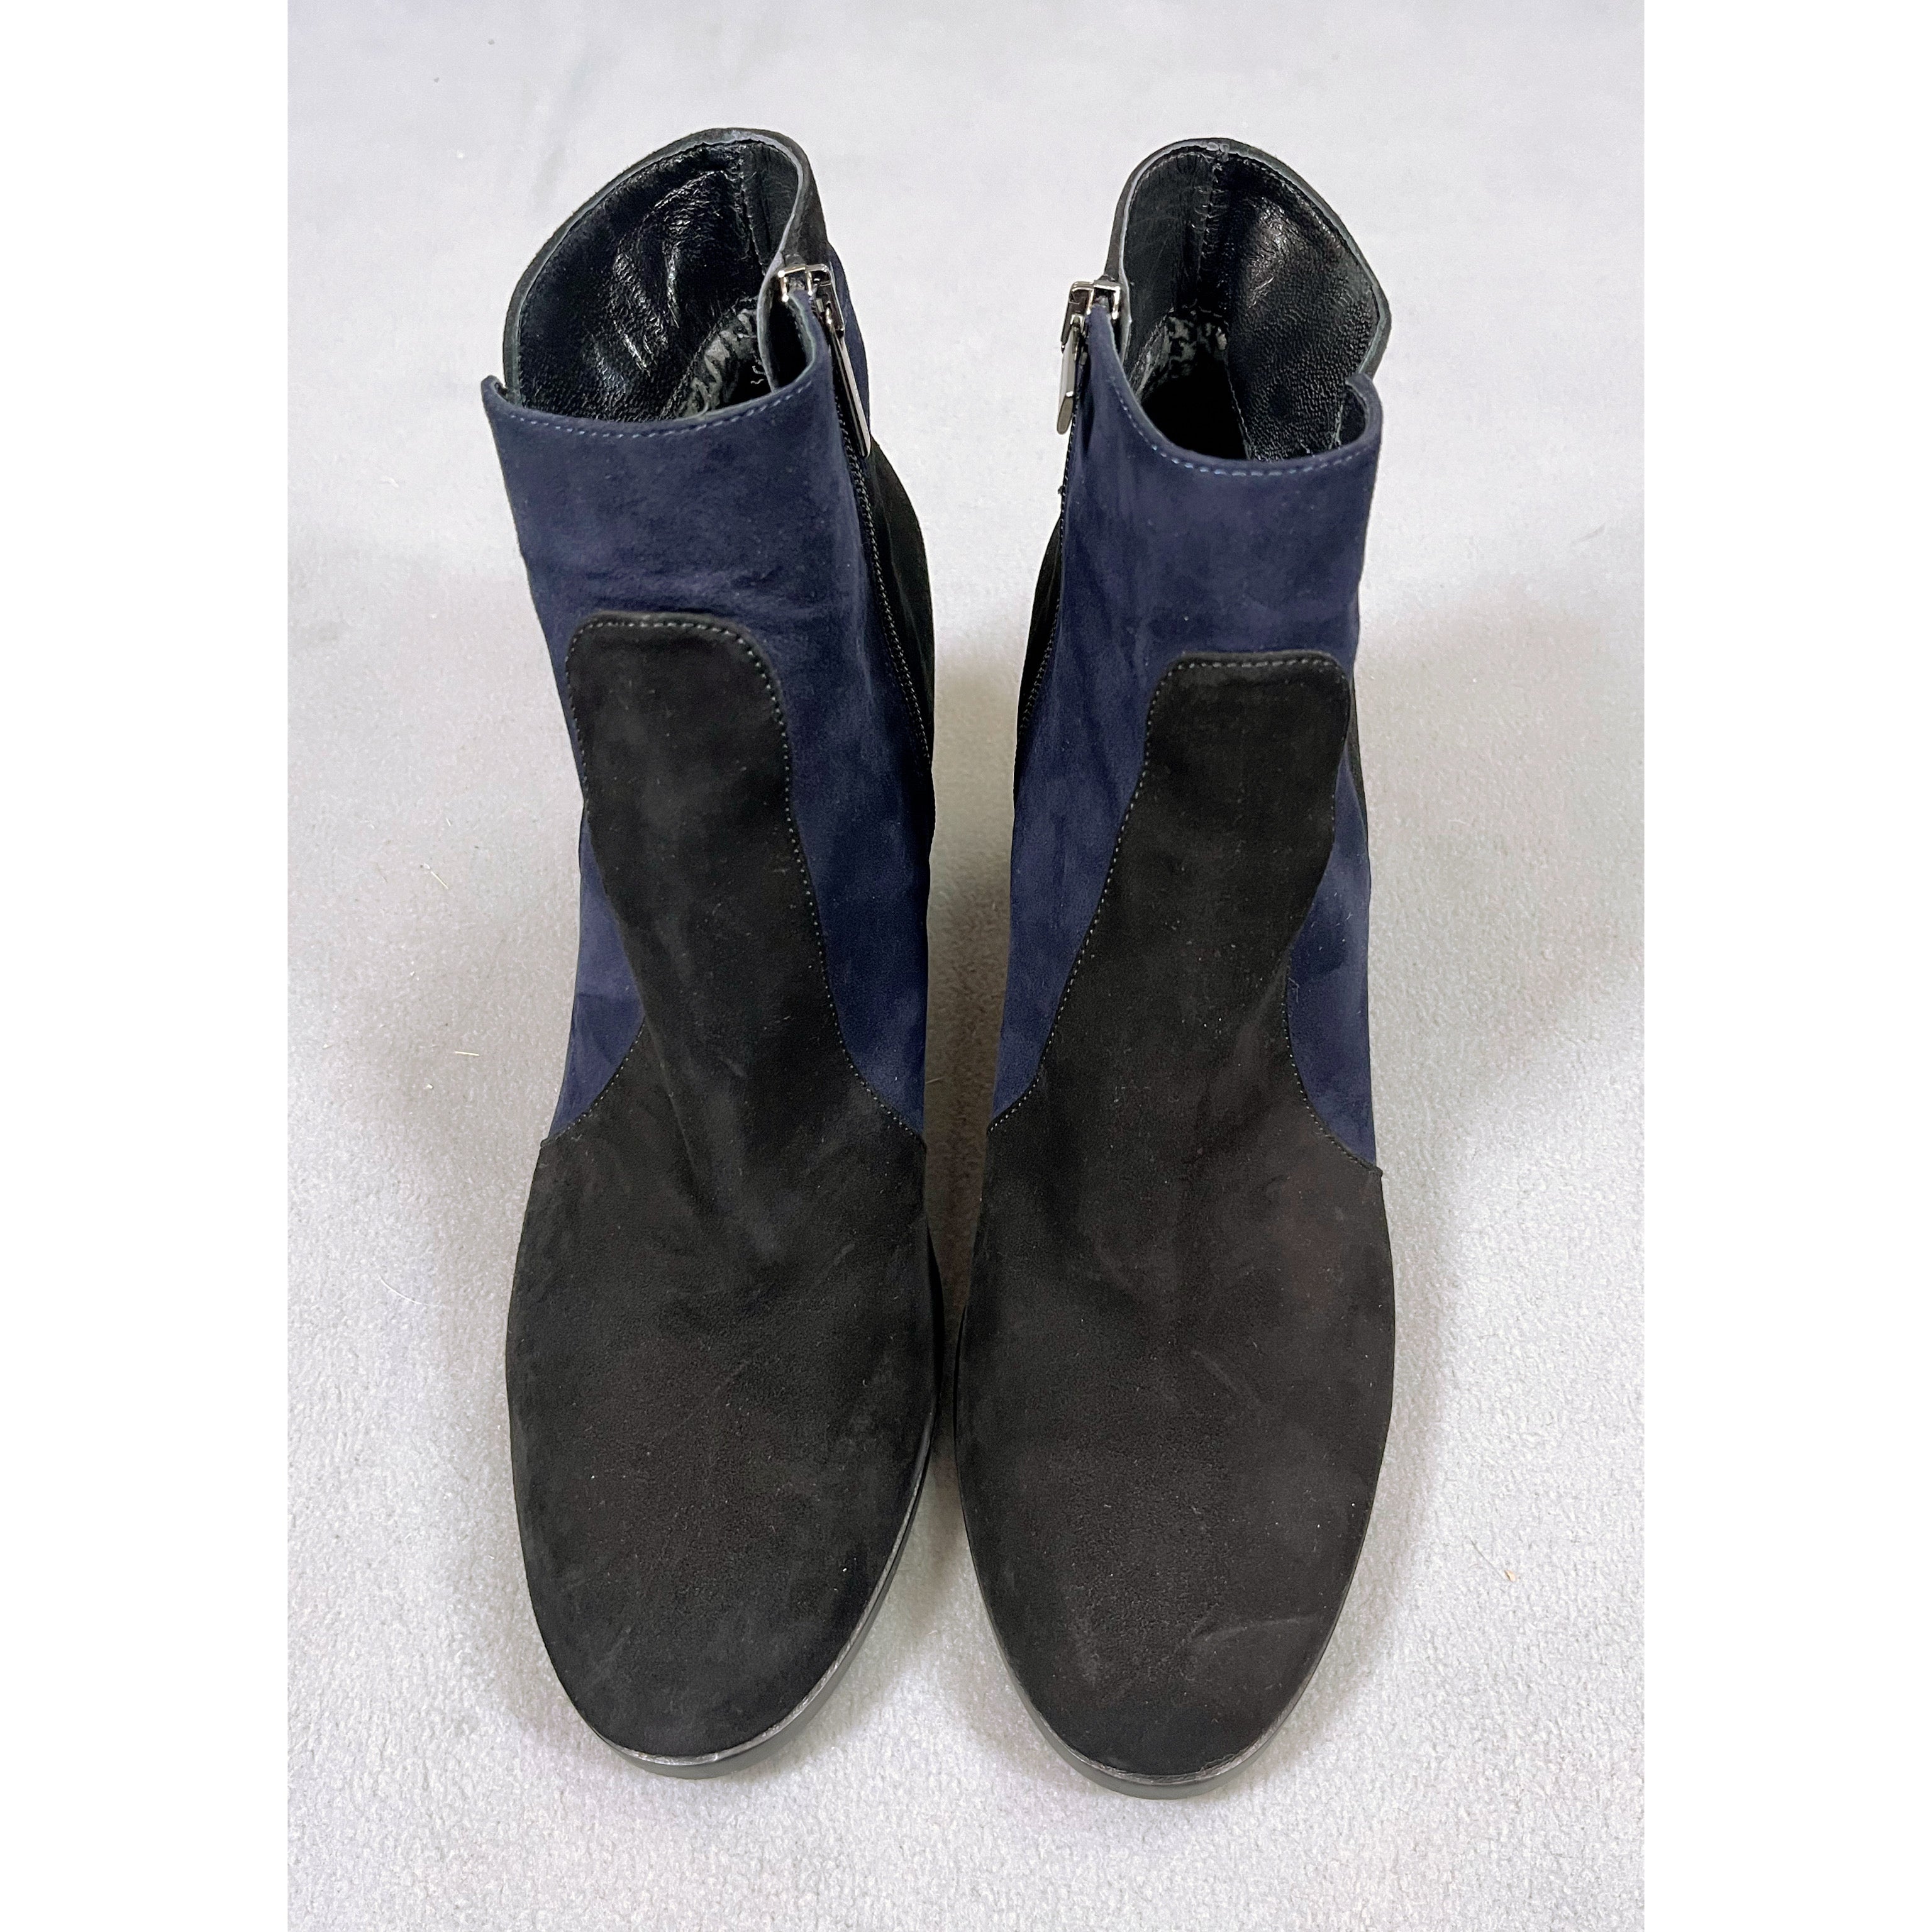 Aquatalia "Elliana" black and navy boots, size 11